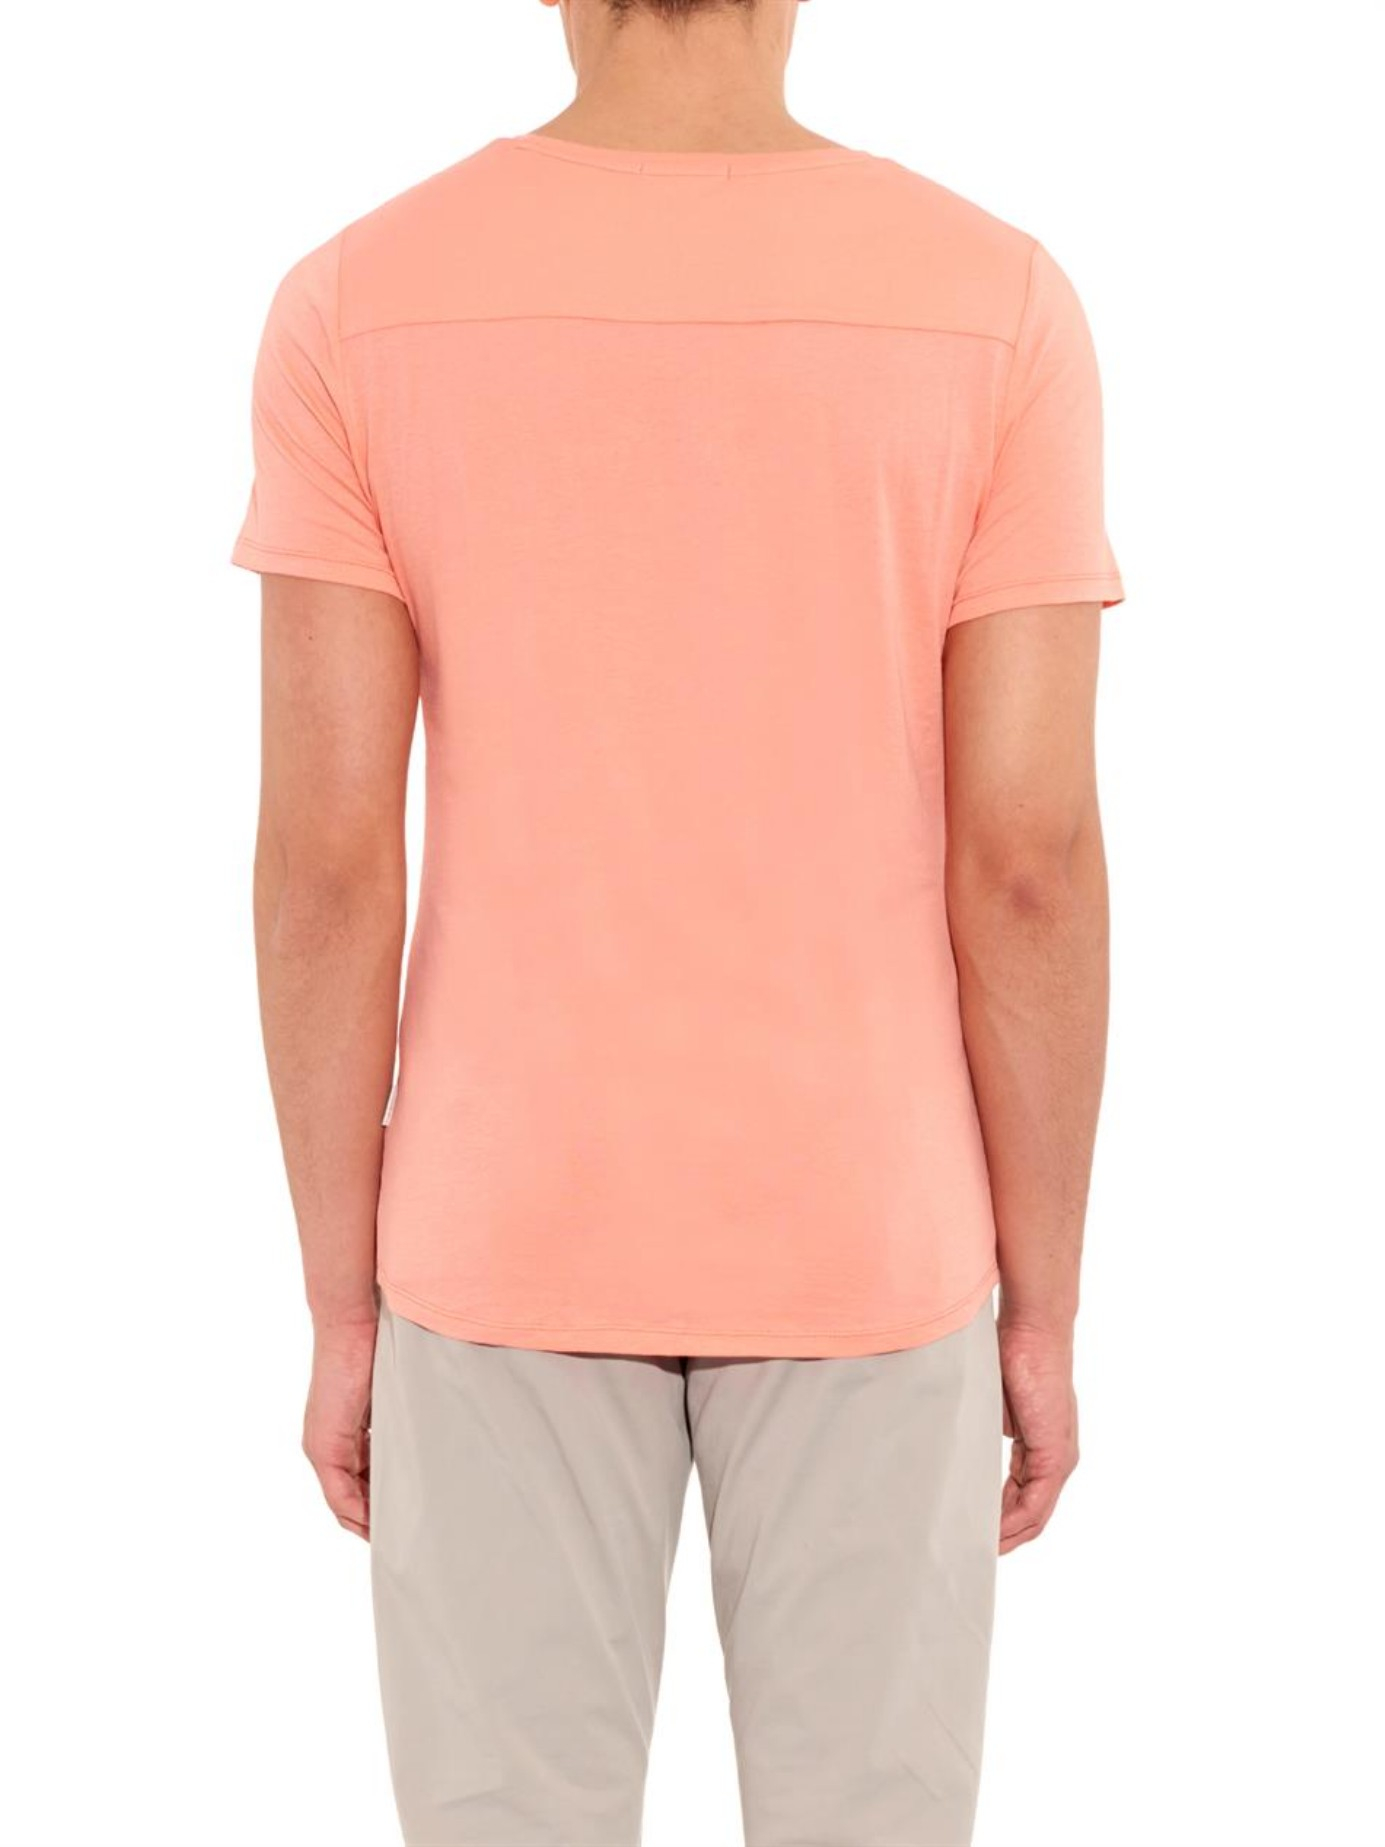 Lyst - Onia Joey Pocket T-Shirt in Orange for Men1385 x 1847